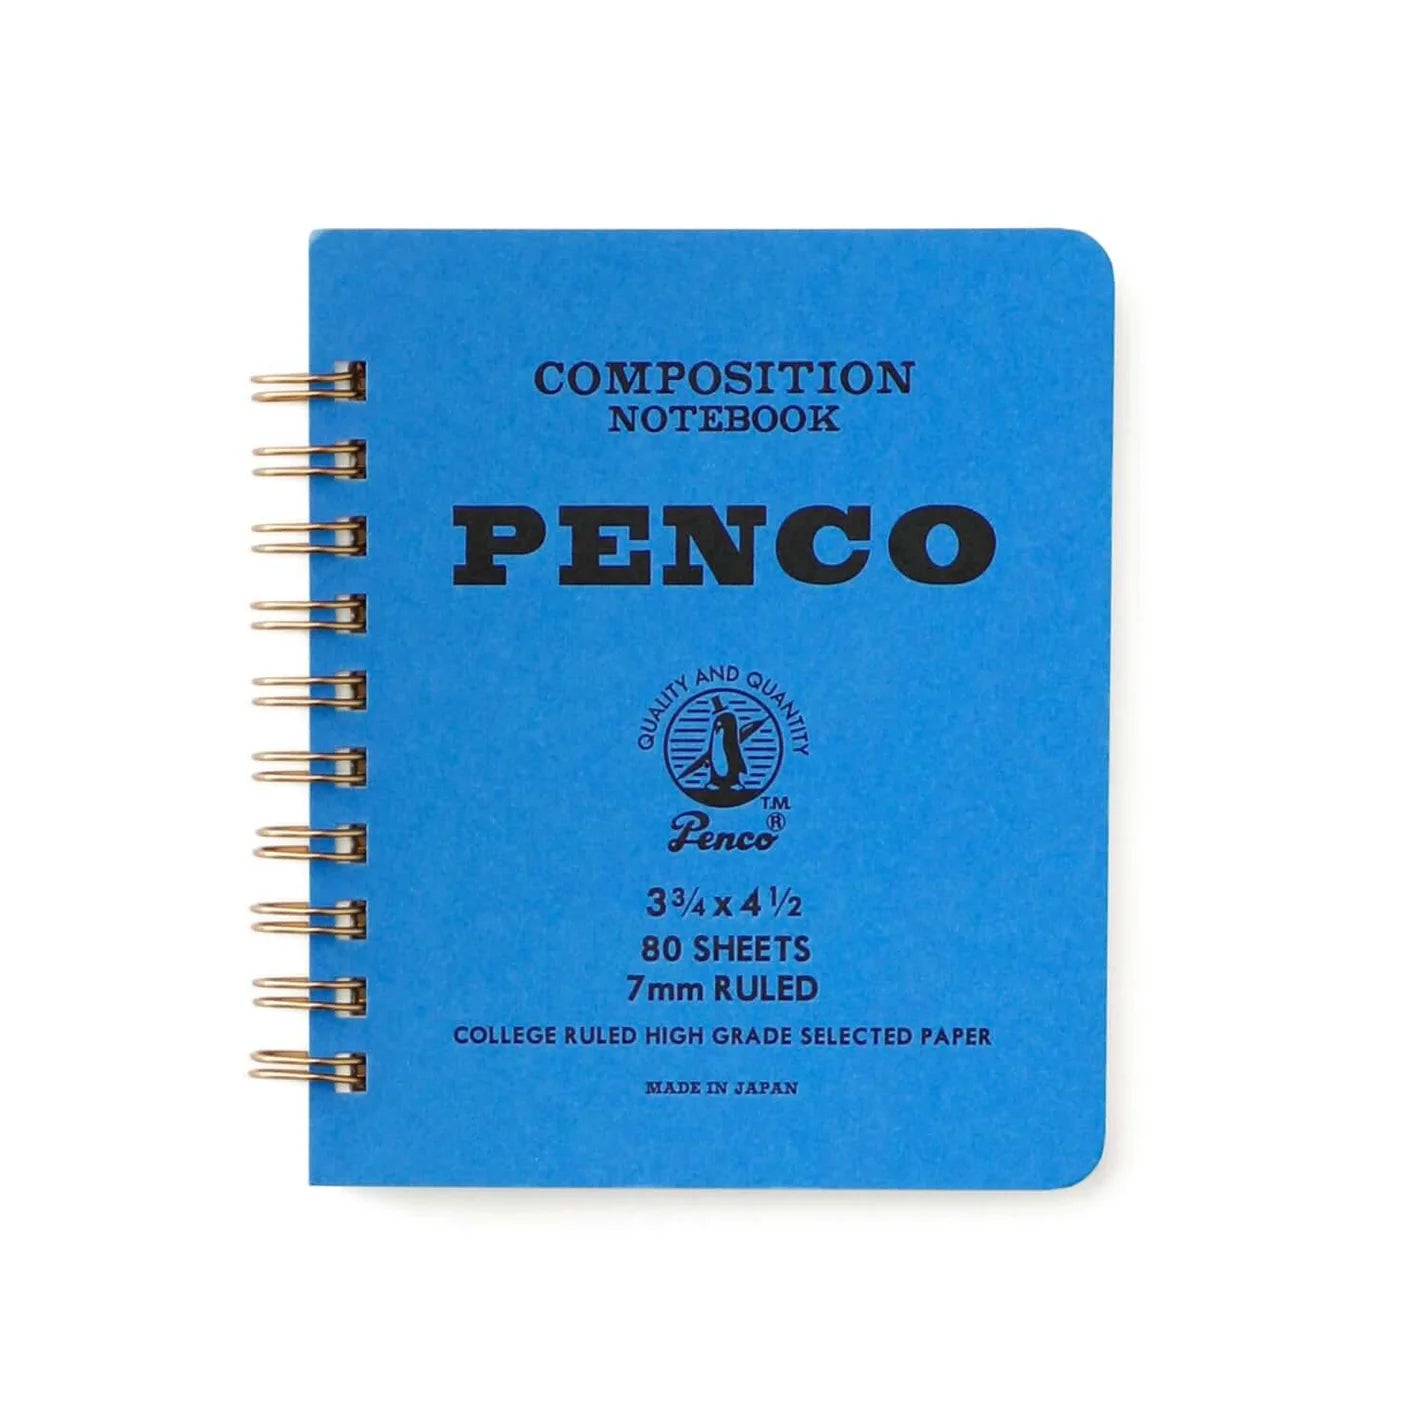 Penco composition notebook